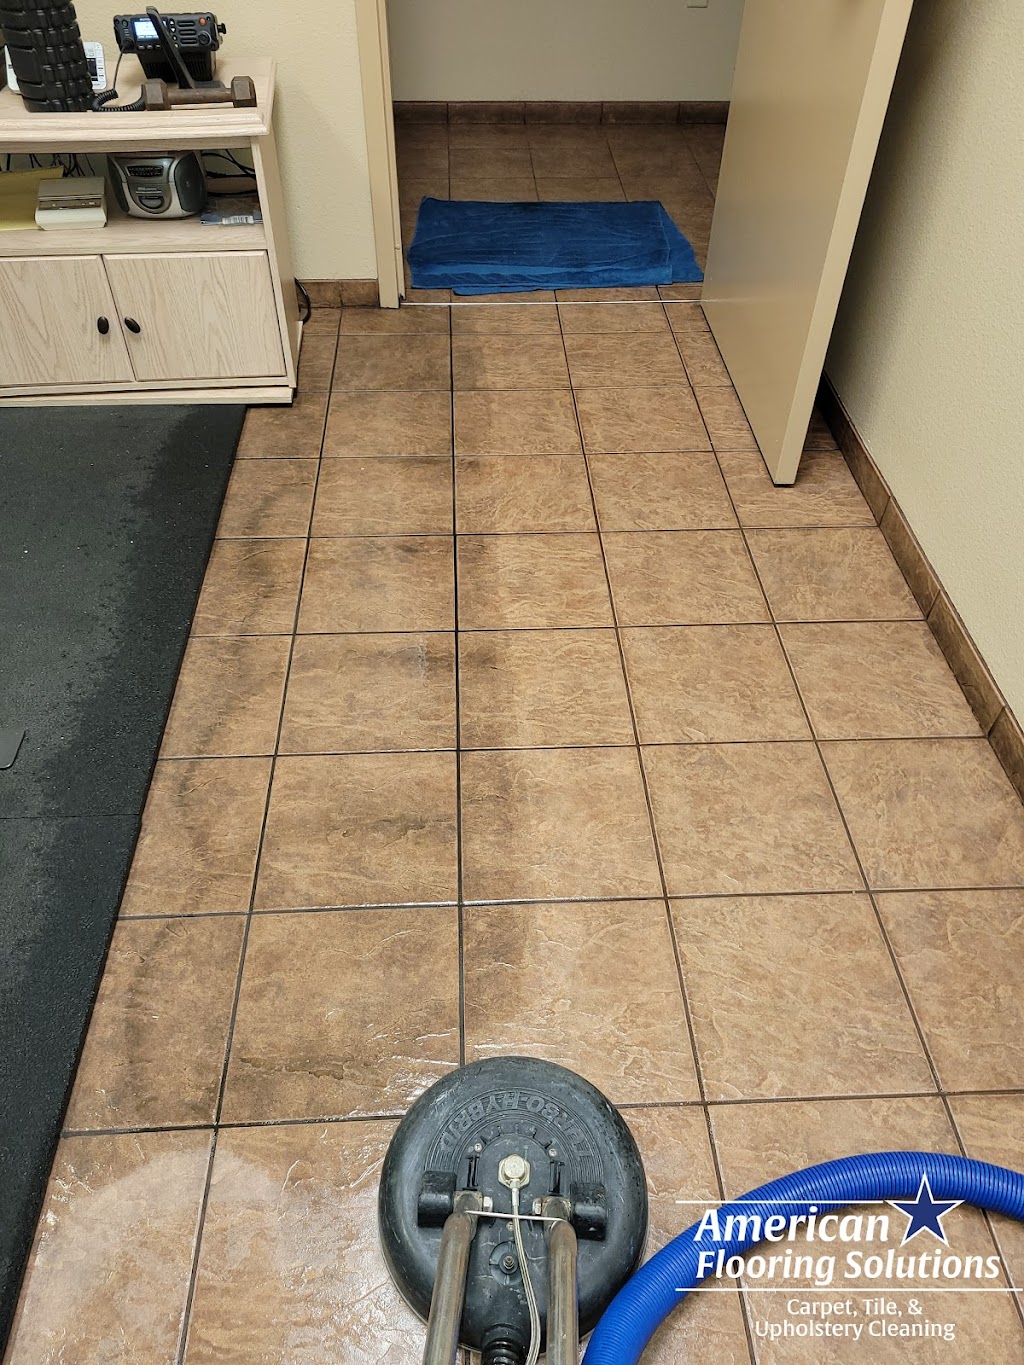 American Flooring Solutions Carpet and Tile Cleaning | 2131 Amanda Dr, Sarasota, FL 34232 | Phone: (941) 400-2254